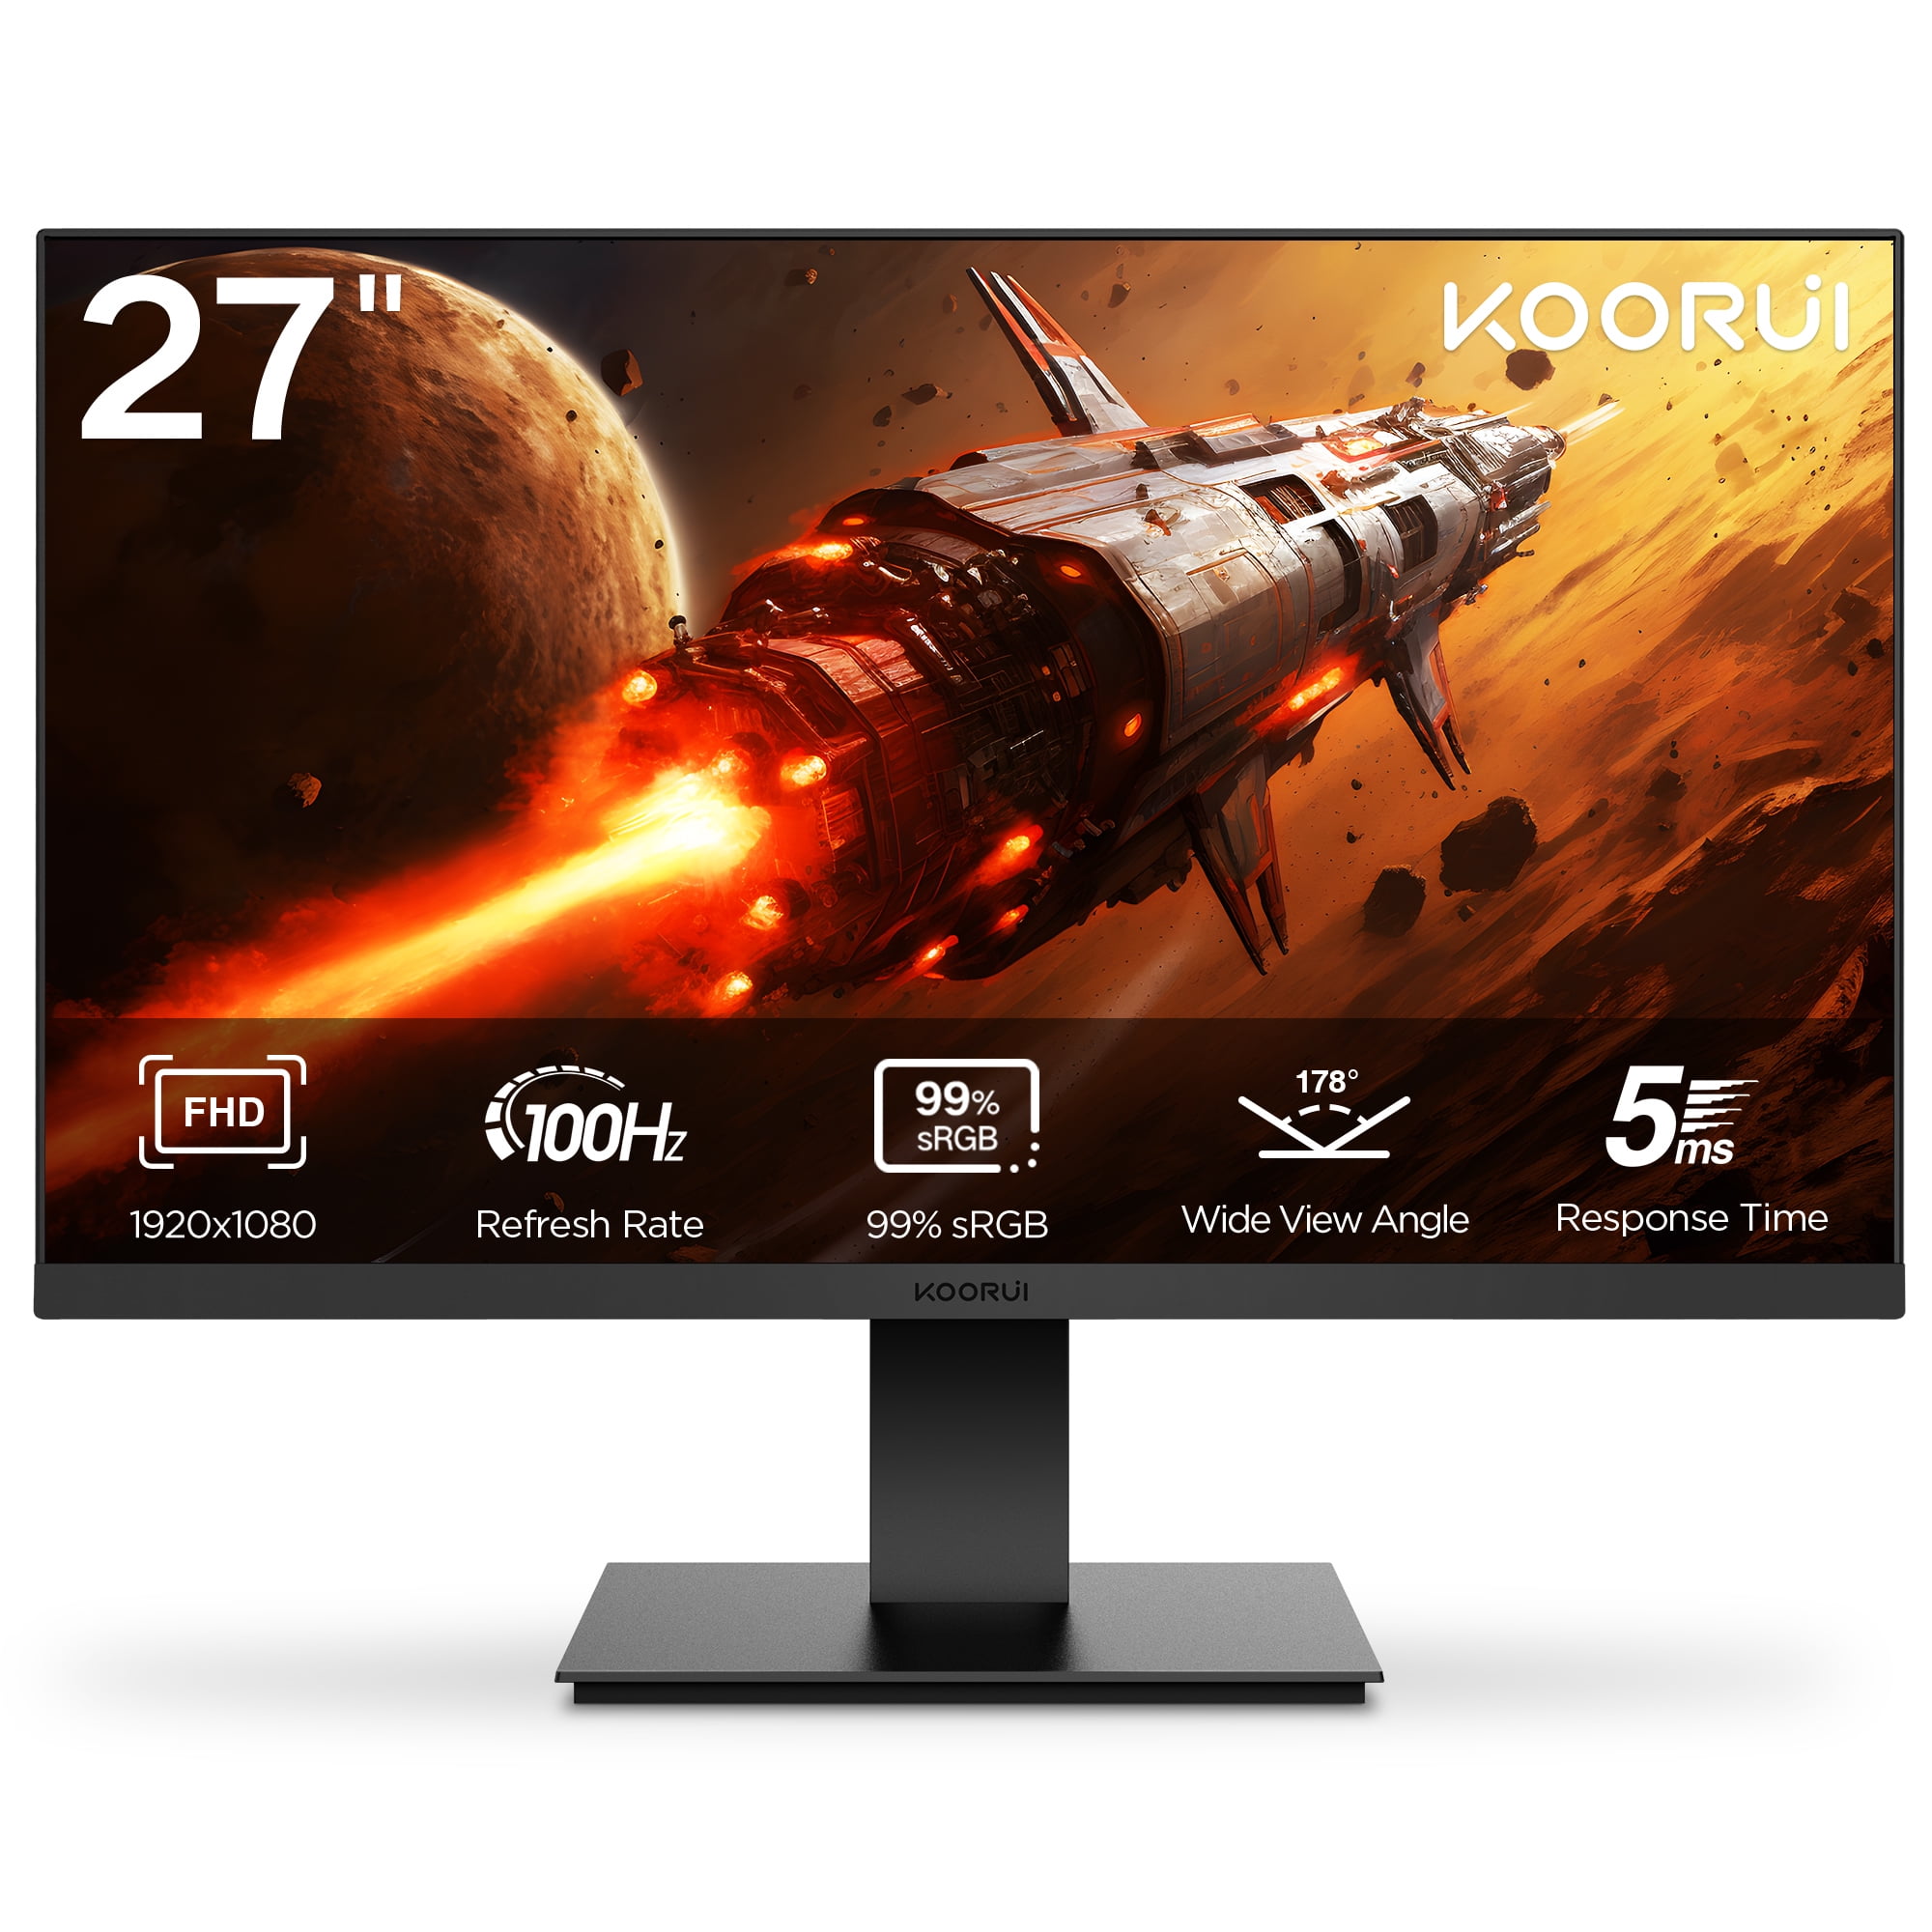 KOORUI 27'' FHD Gaming Monitor, 1080p, 75Hz, HDMI+VGA, 99% sRGB, Virtually Borderless Design Display 27n1a, Black